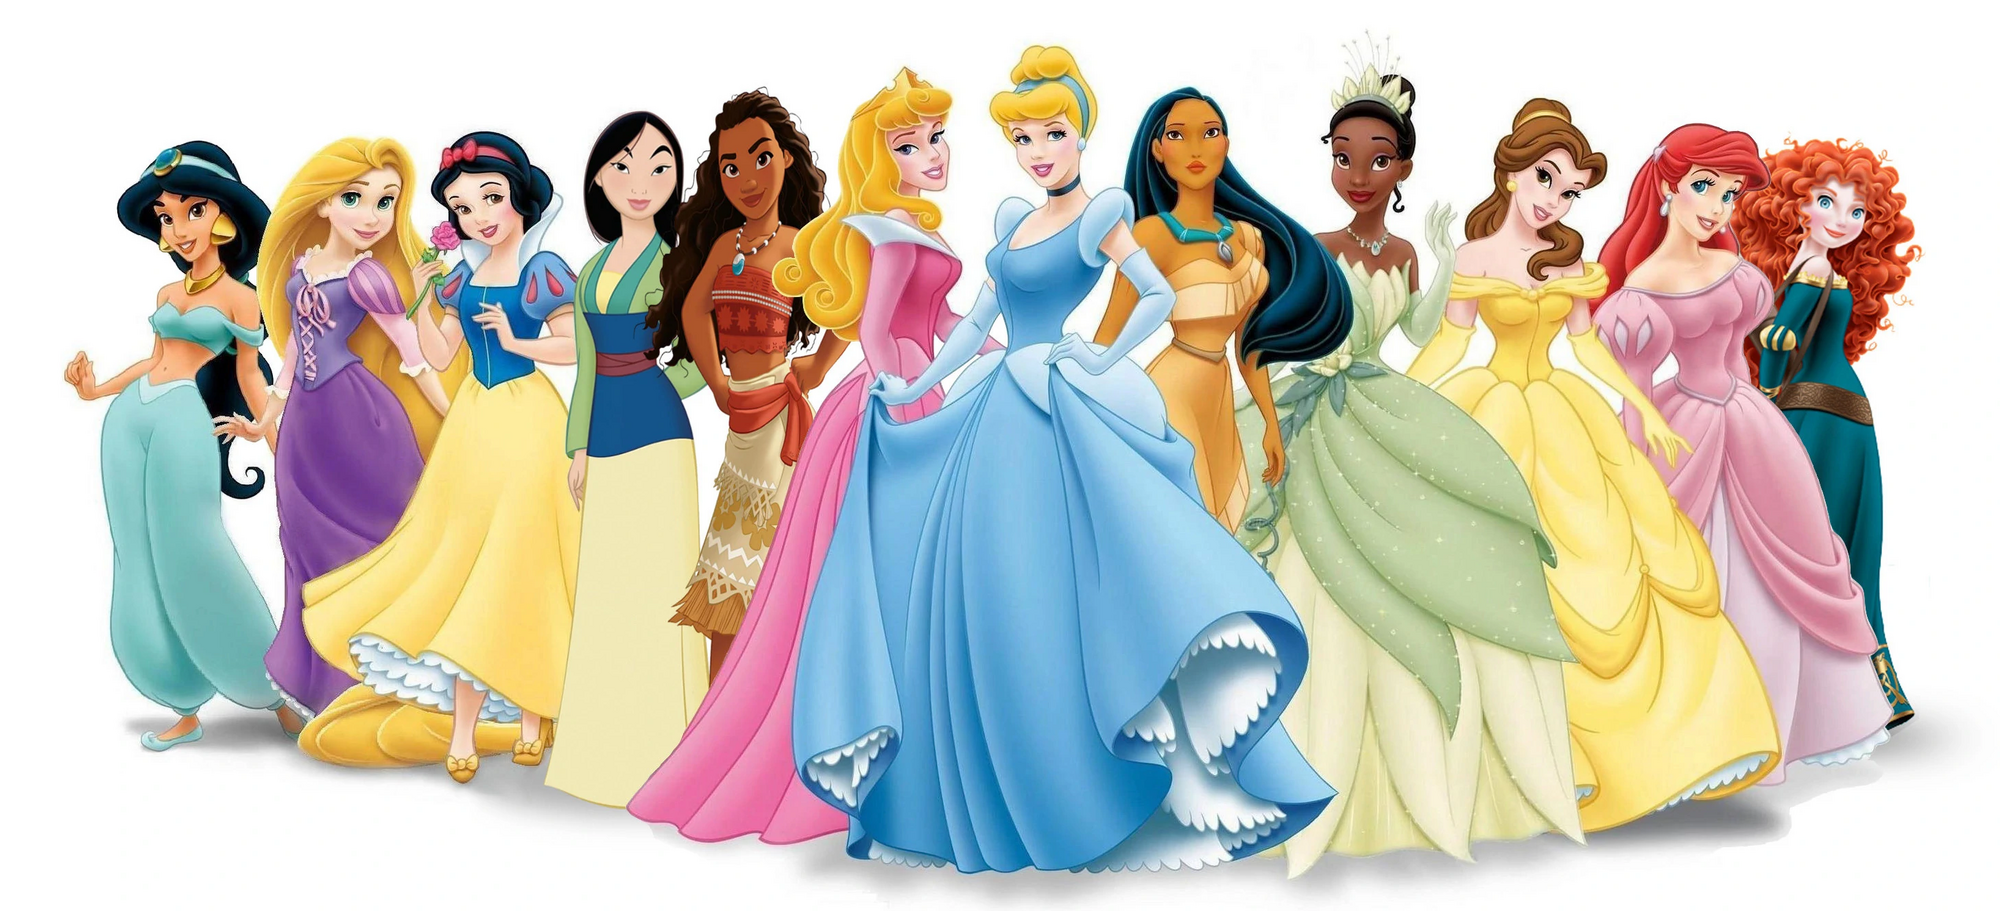 Image result for disney princesses